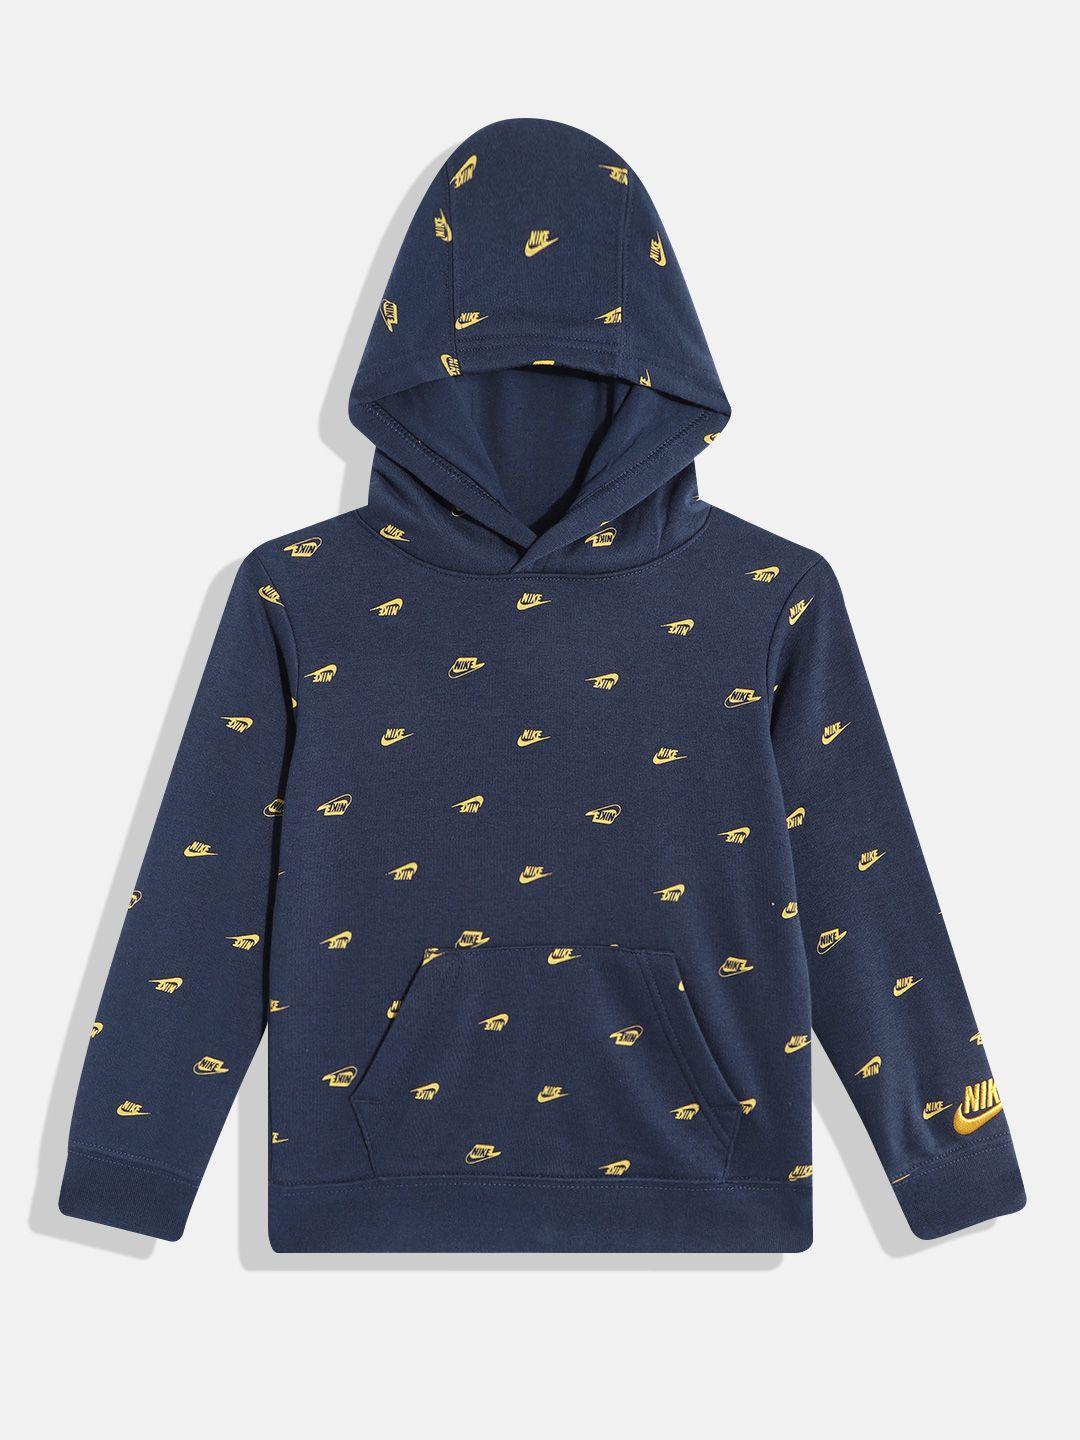 nike boys navy blue brand logo printed hooded sweatshirt